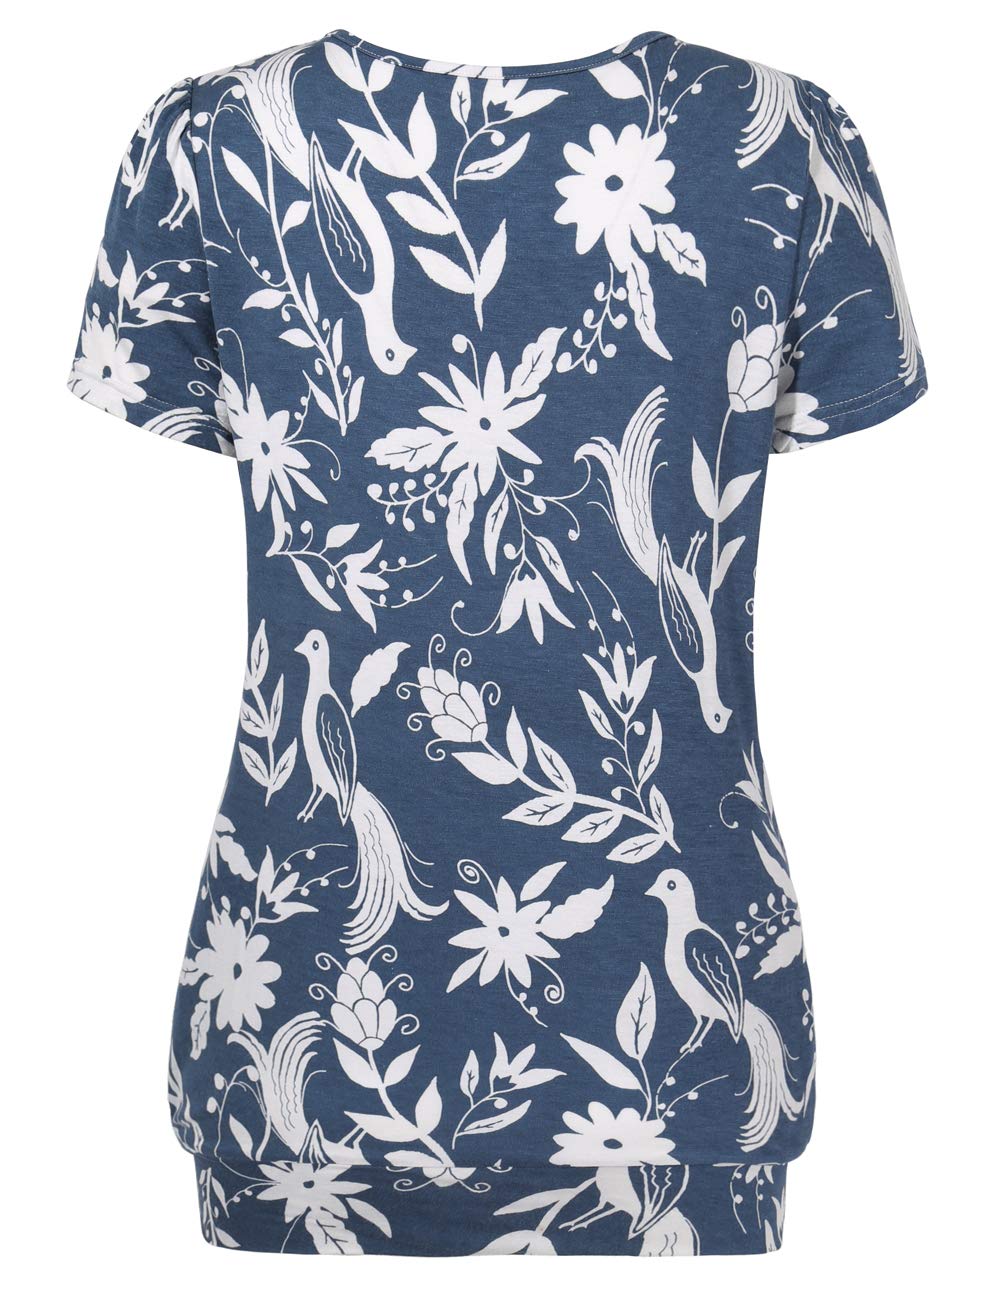 DJT Scoop Neck Flower Bird Print Short Sleeve Women's Pleated Front Blouse Tunic Tops